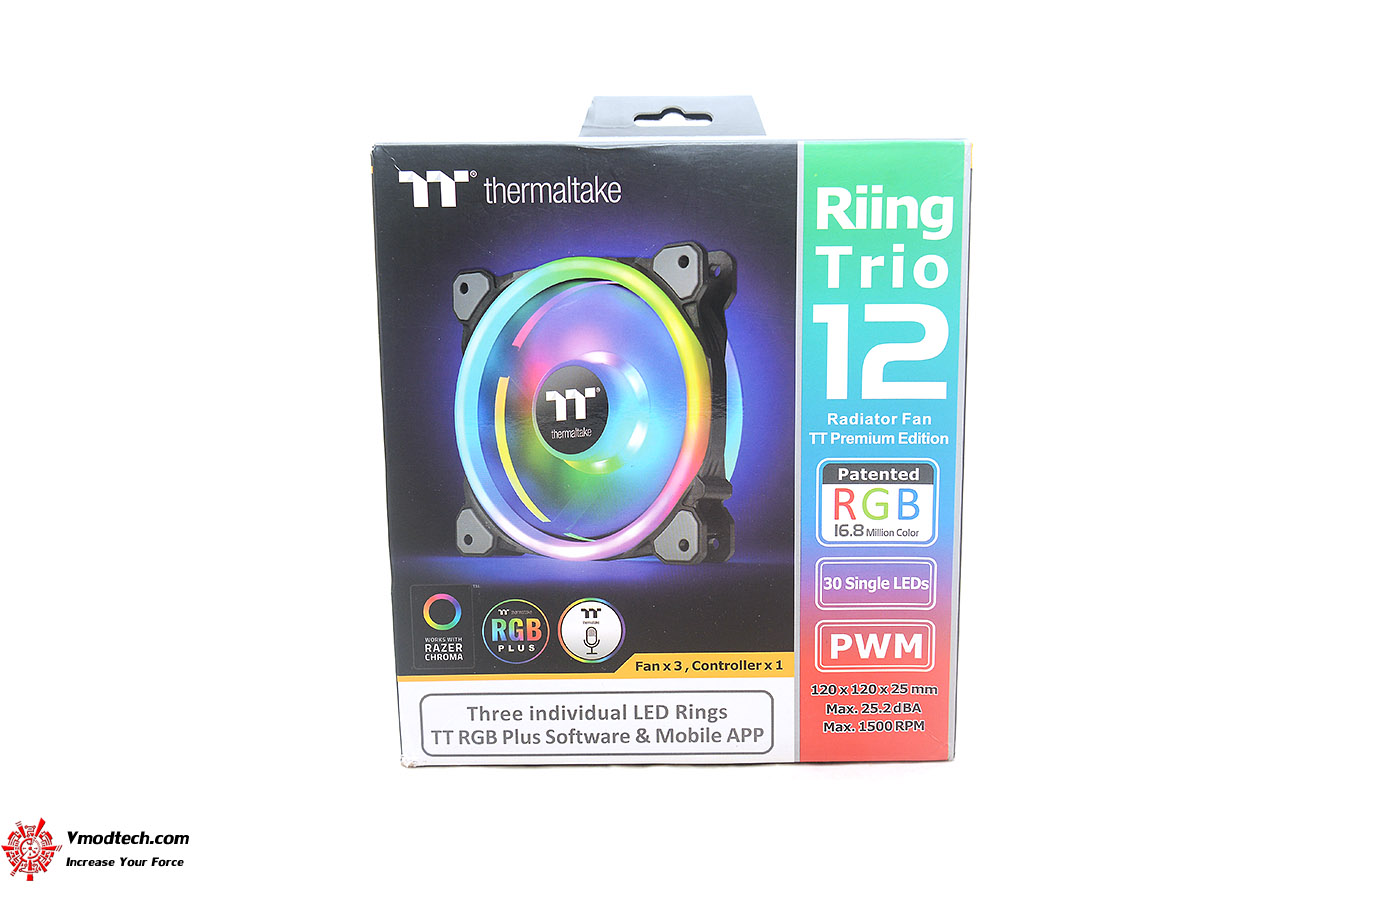 dsc 8072 Riing Trio 12 LED RGB Radiator Fan TT Premium Edition (3 Fan Pack) Review